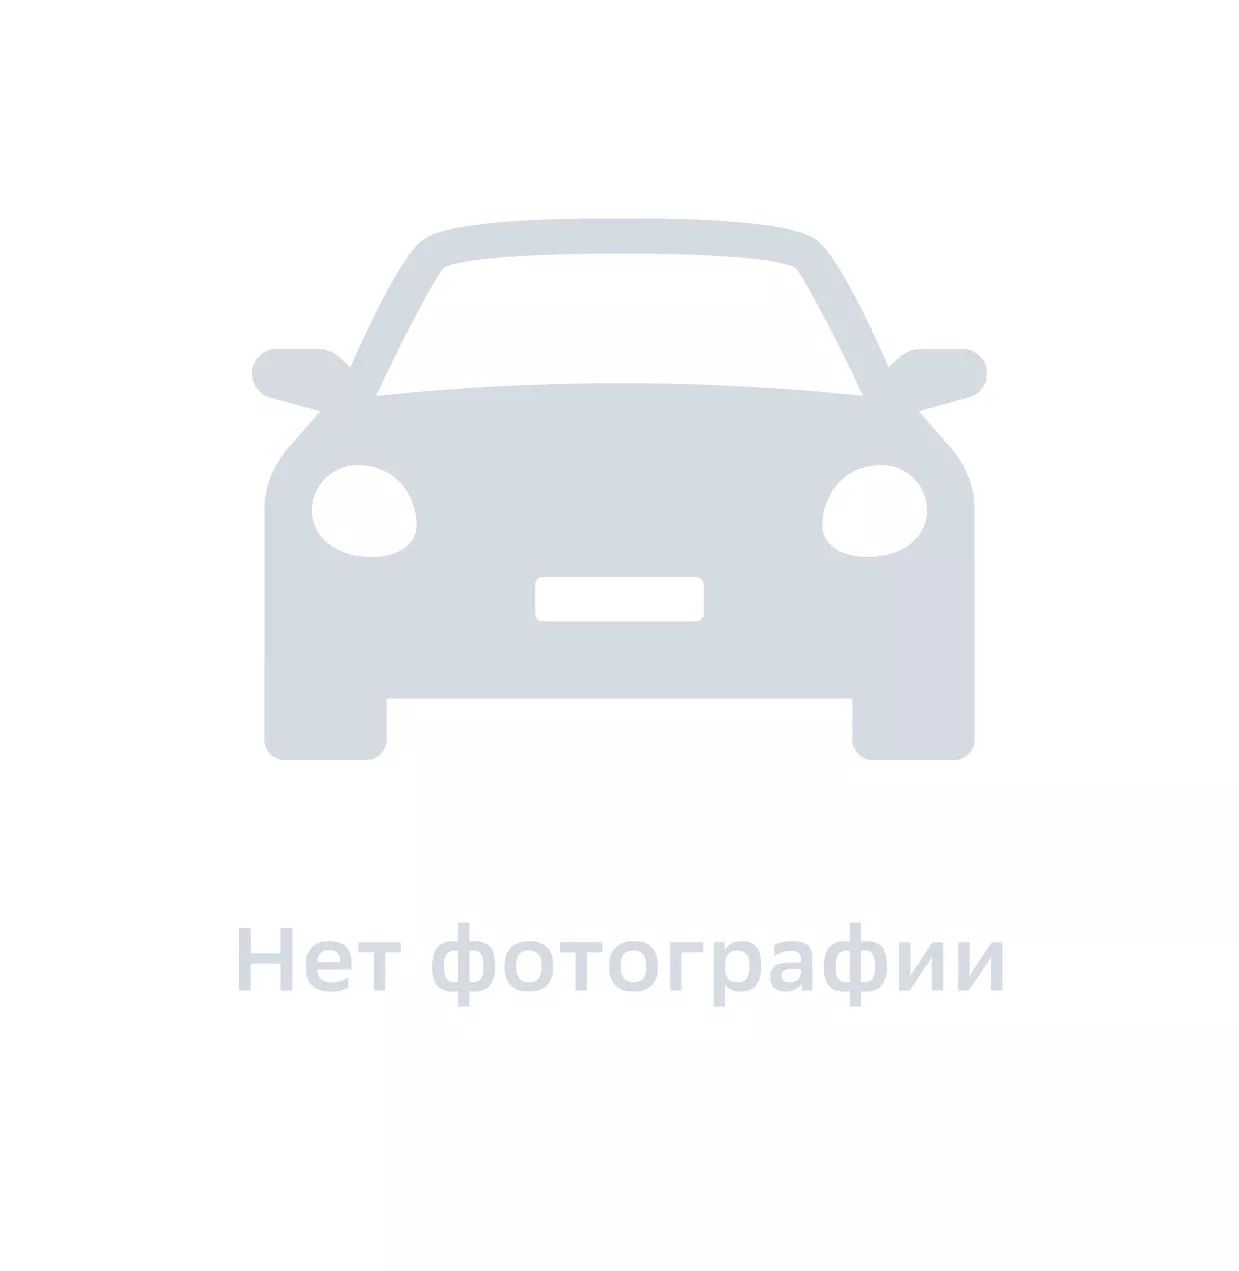 Актуатор двери передней правой, Hyundai-KIA, арт. 0K01958350, цена за 1 шт.